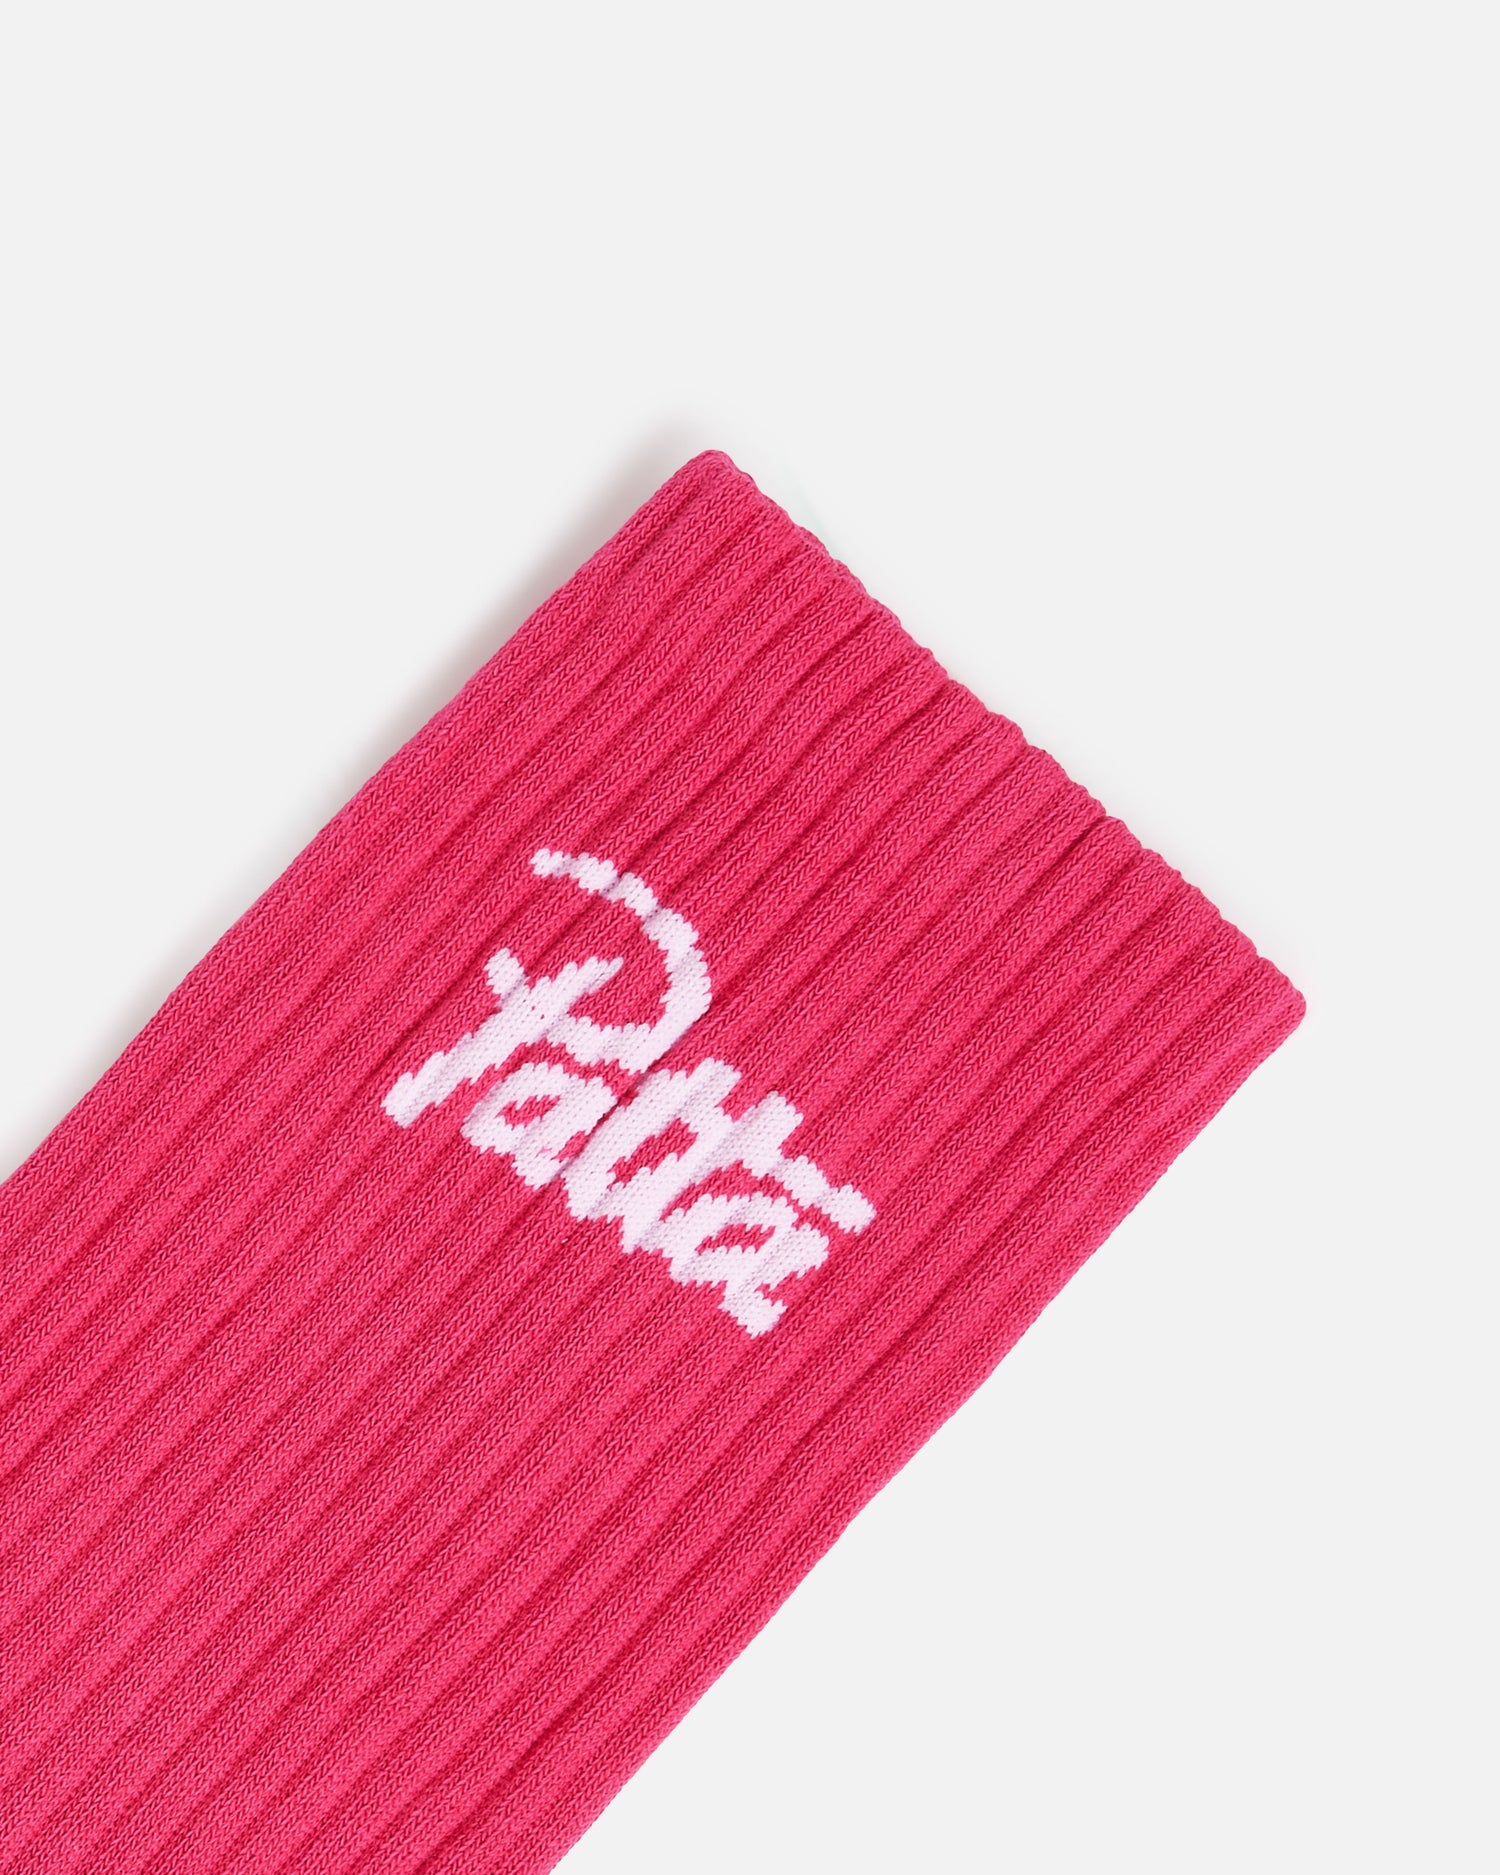 Chaussettes de sport Patta Script Logo (rouge fuchsia)